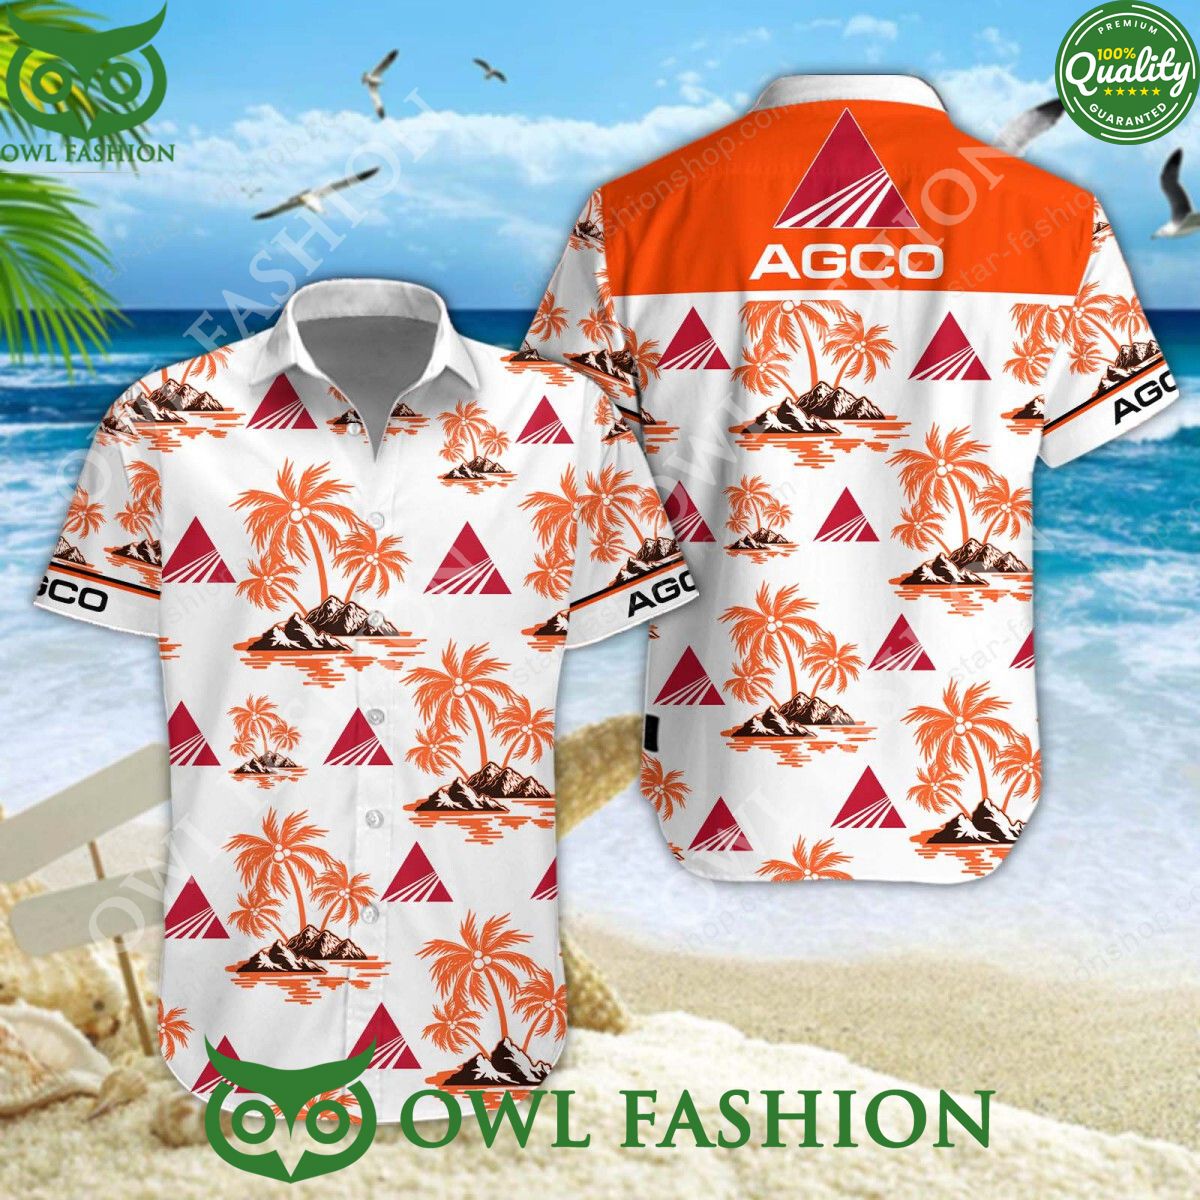 agco allis american agricultural machinery manufacturer hawaiian shirt and short 1 pBGos.jpg